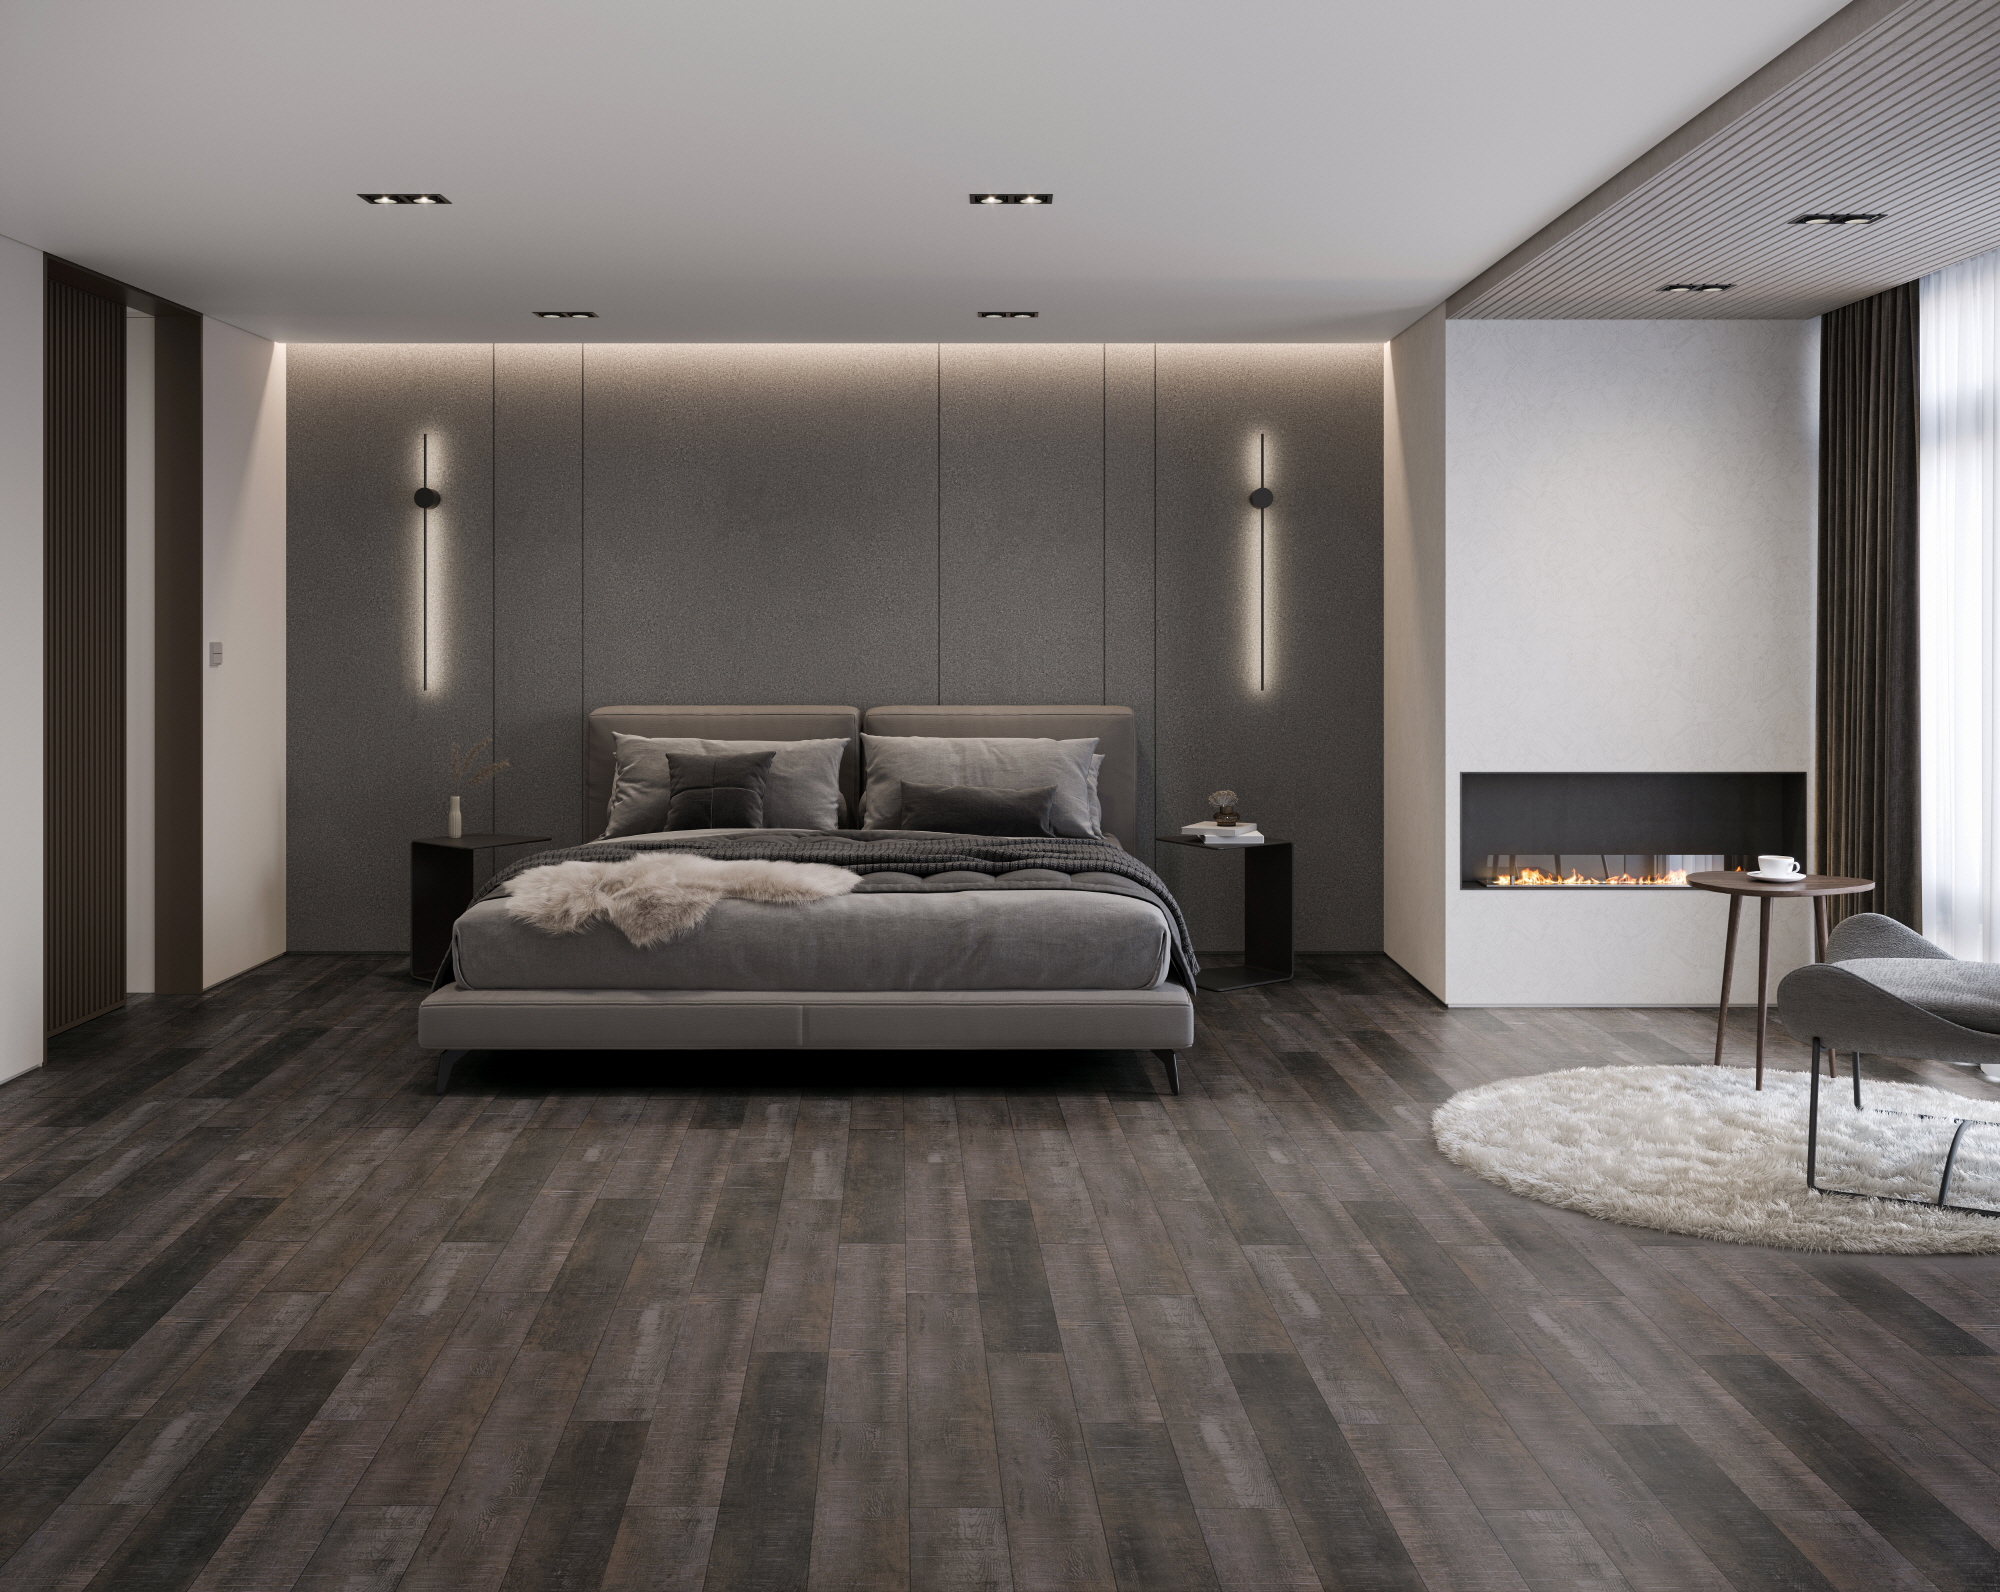 PRESTG Hazy Lilac Oak LVT flooring for Bedroom